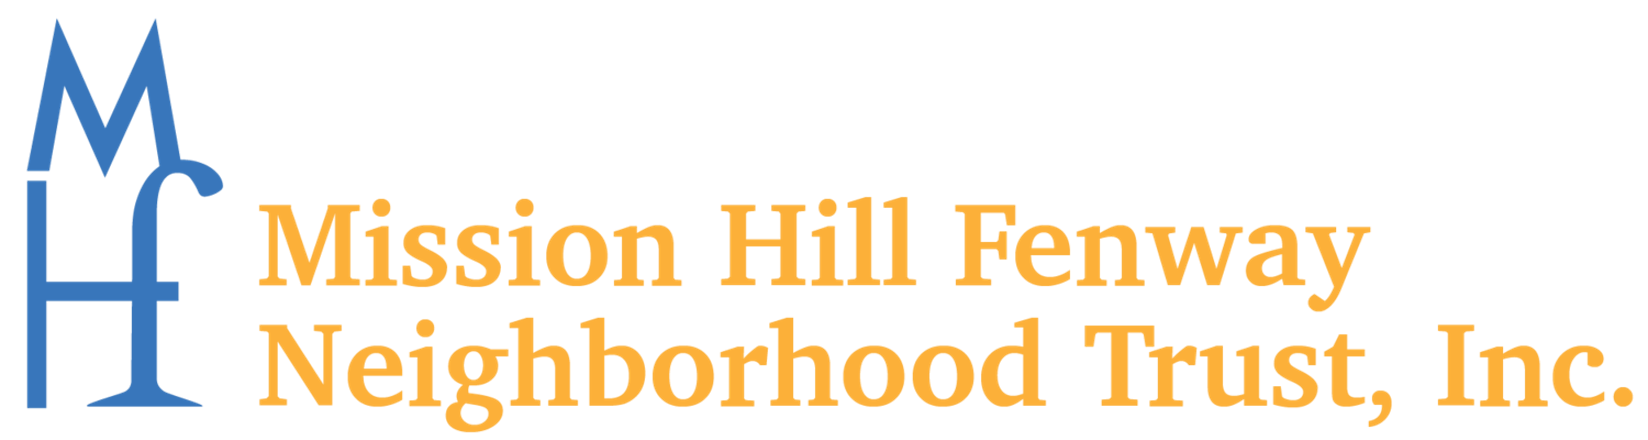 Mission Hill Fenway Neighborhood Trust